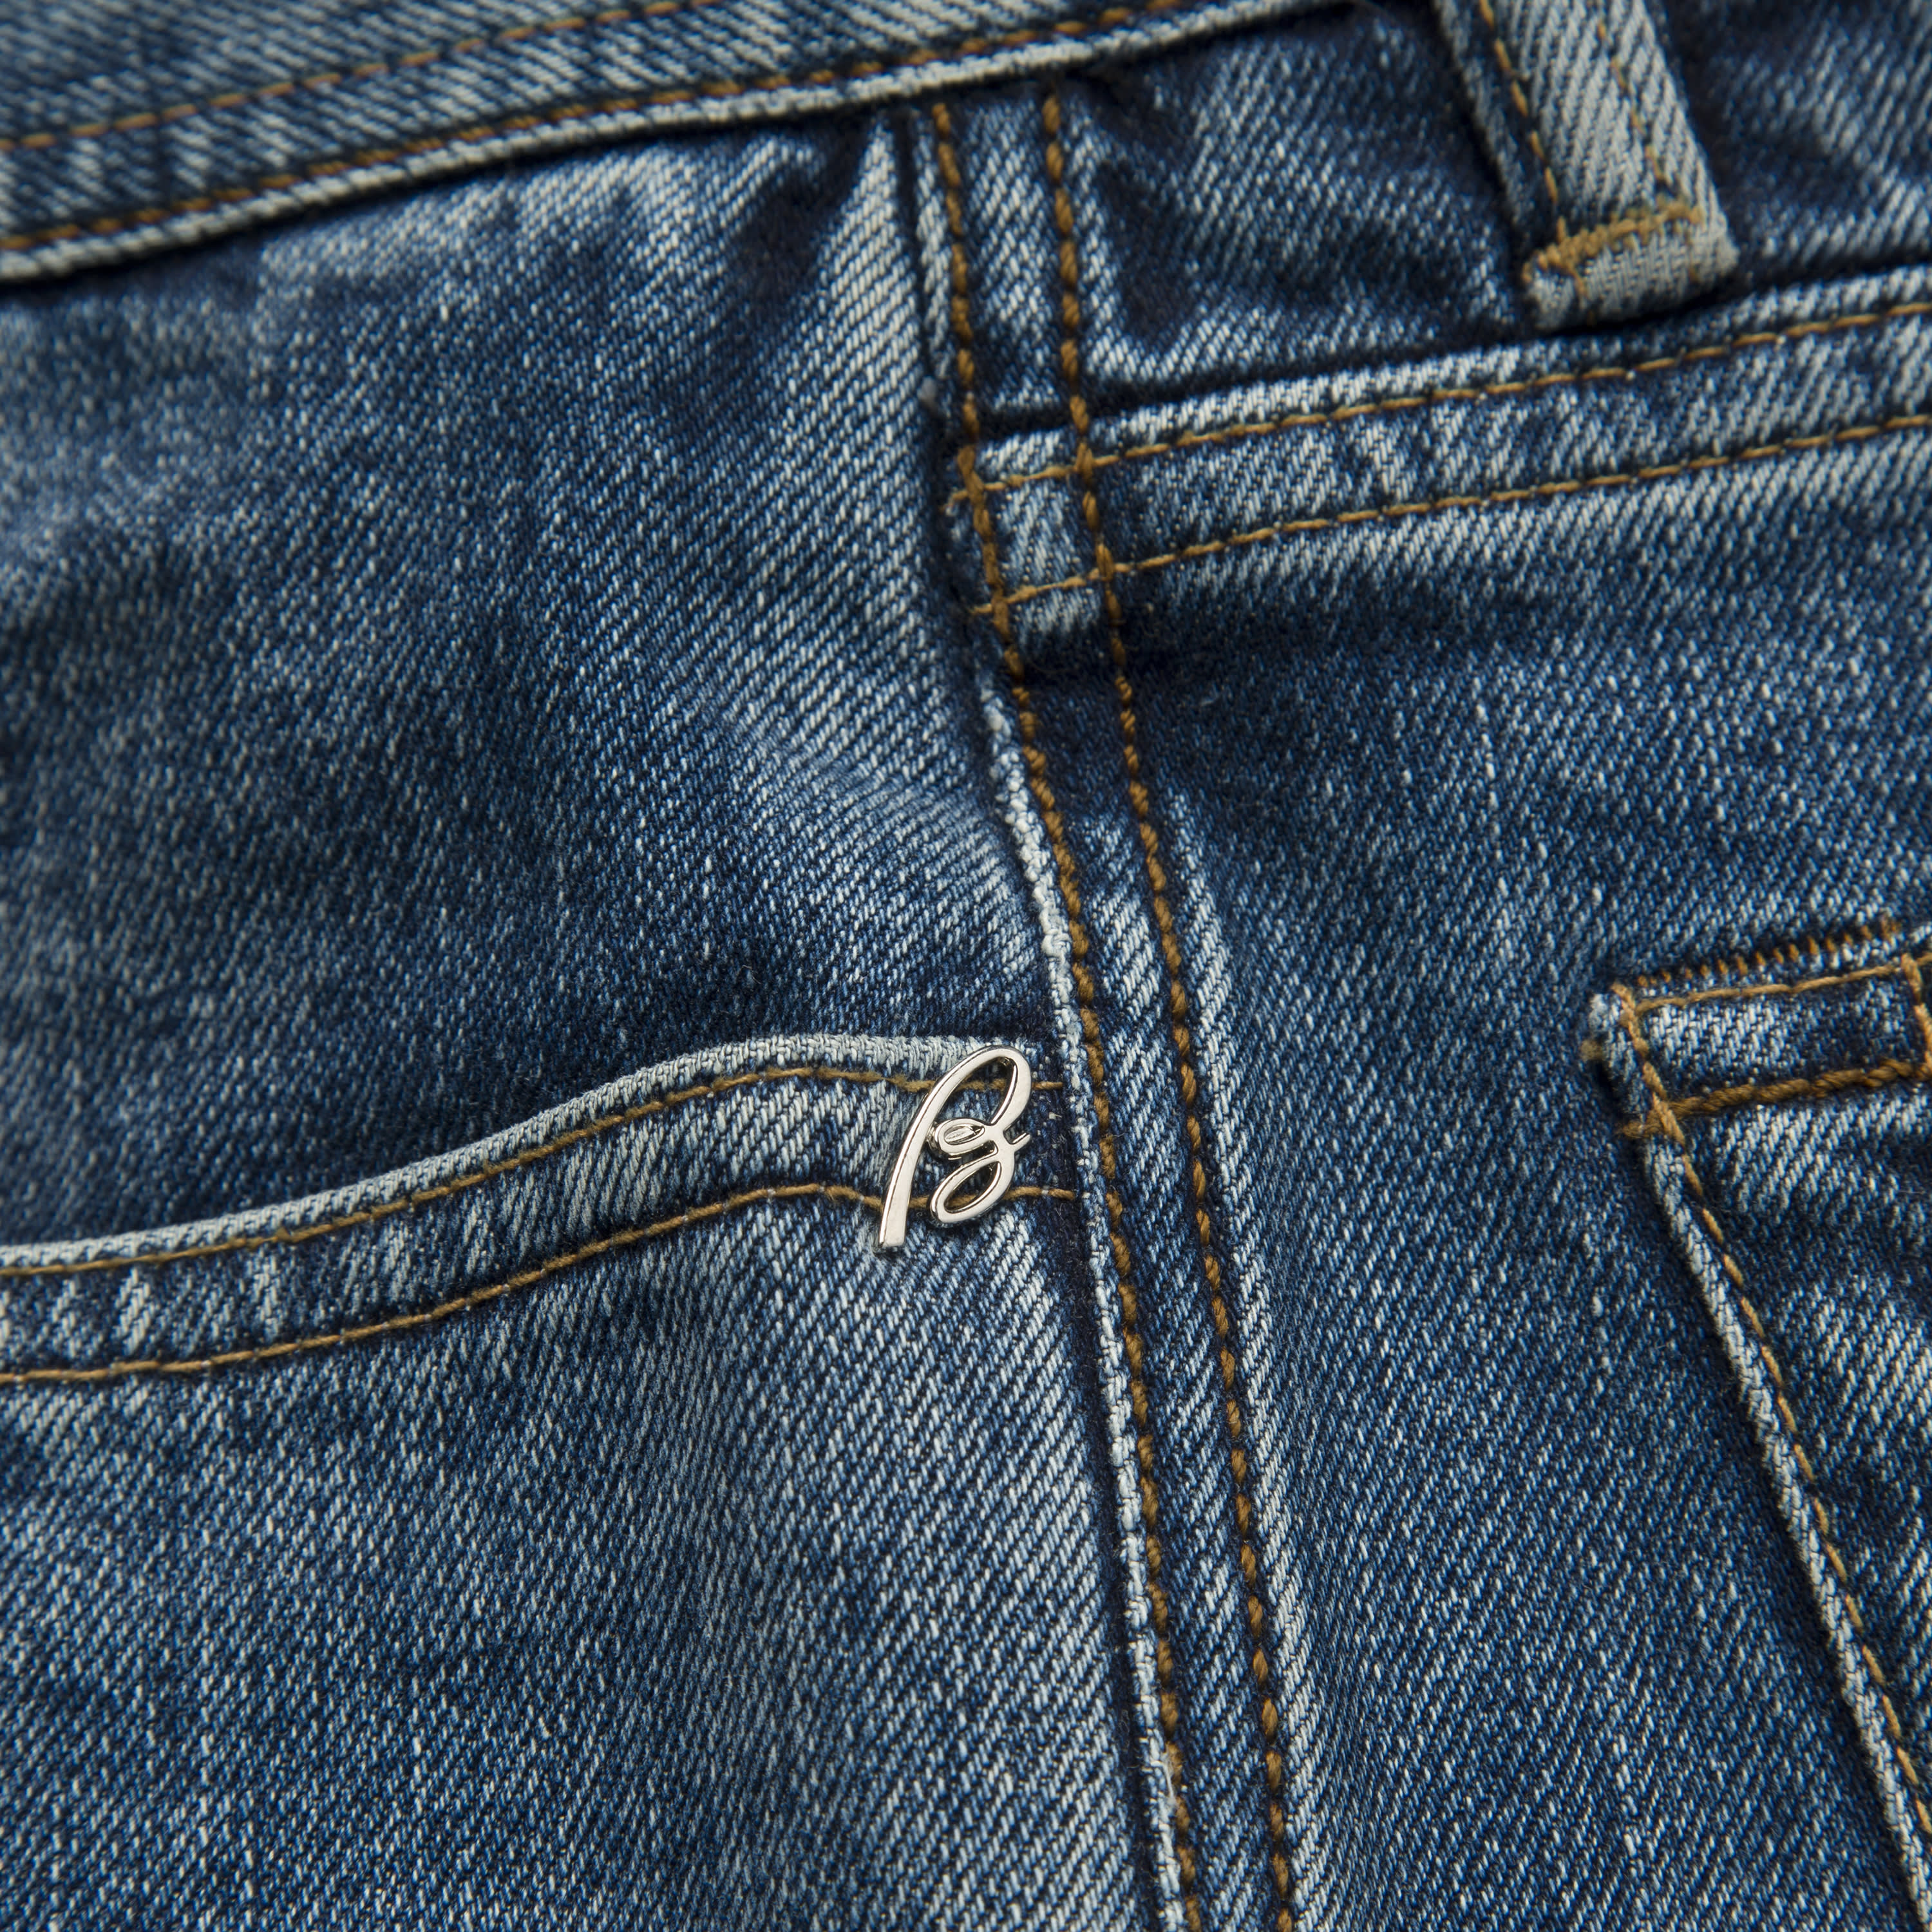 Brioni logo on jeans close up